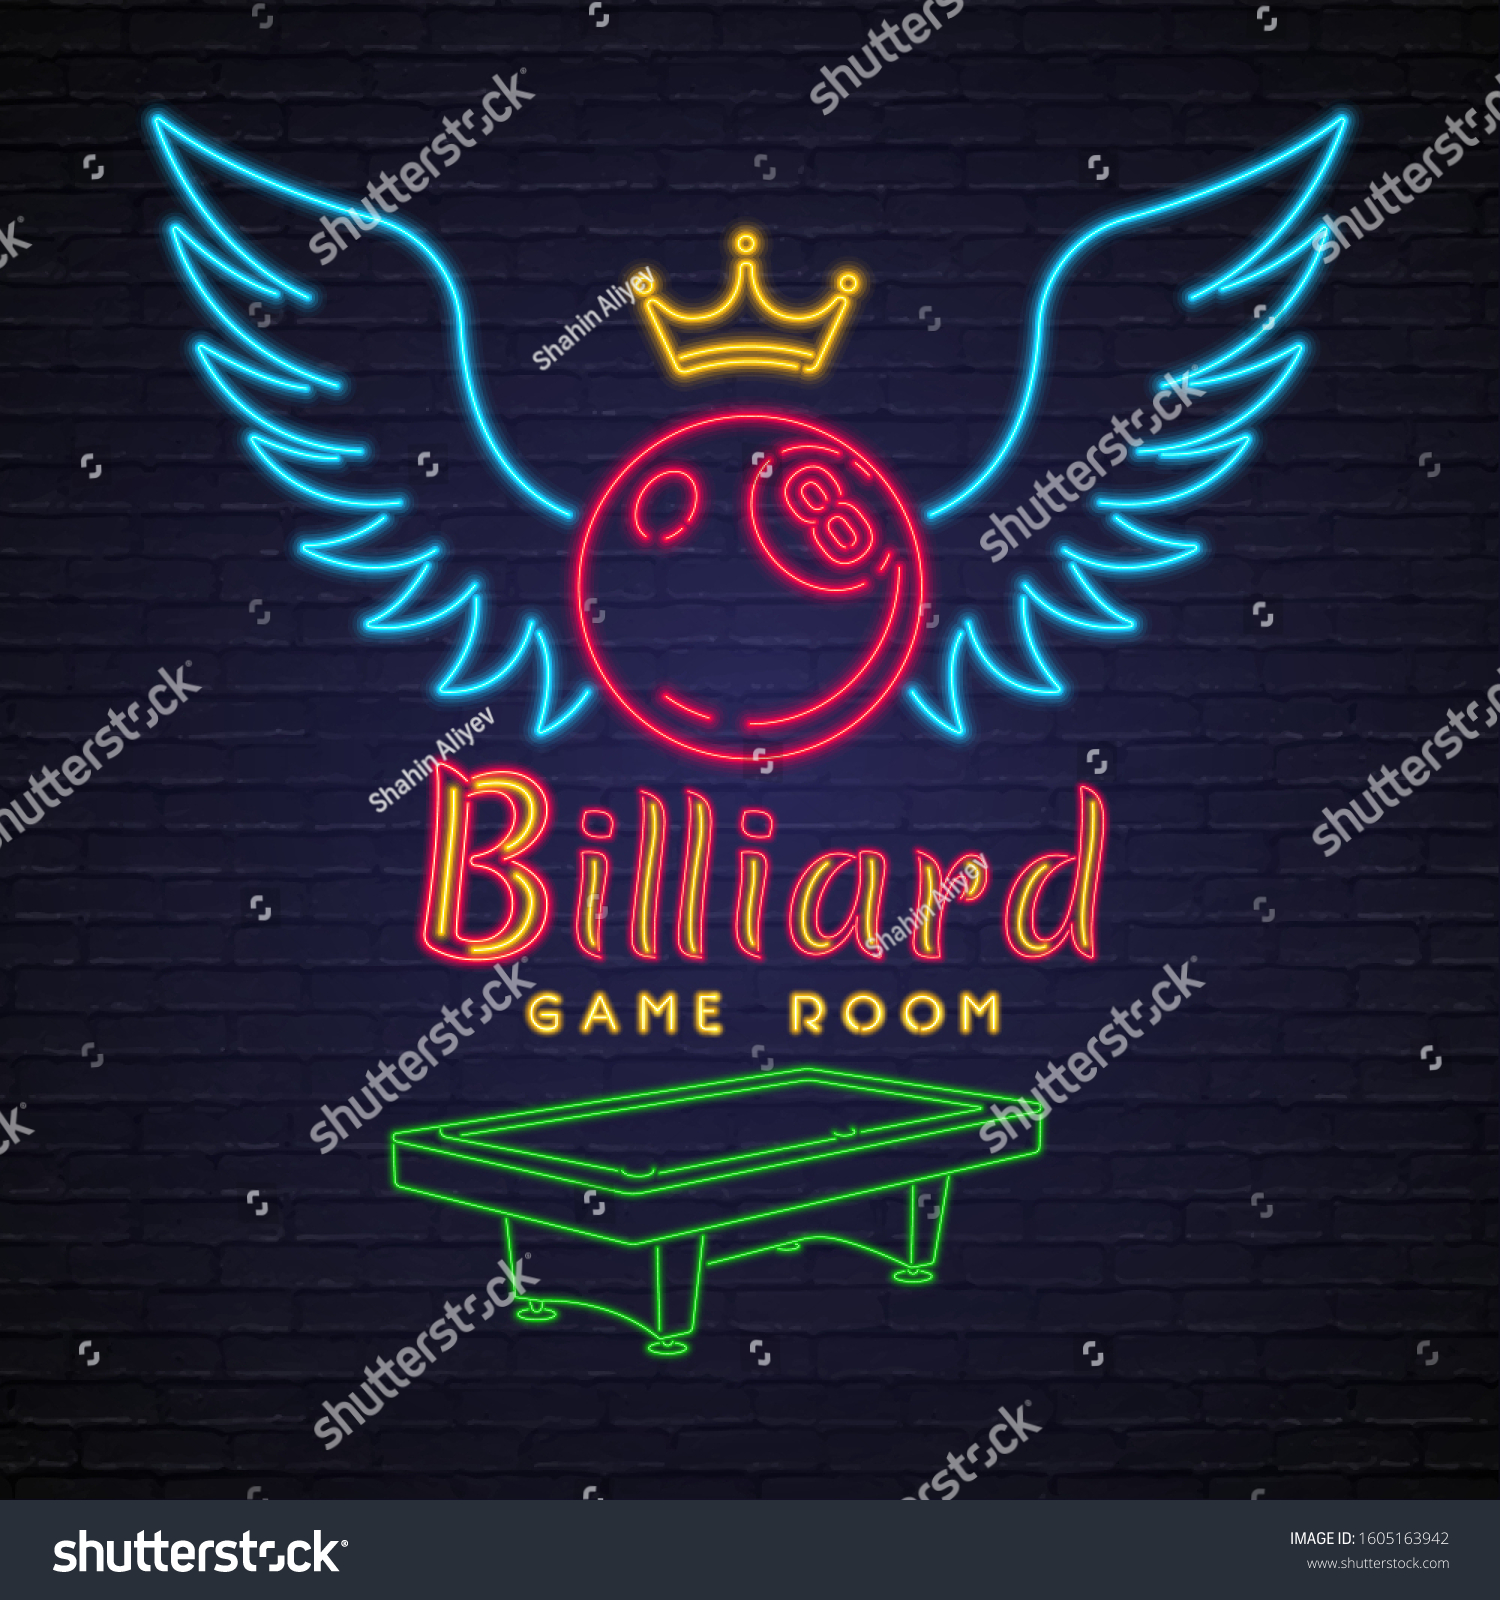 New Pool Shark Billiards Game Room Beer Pub Bar Neon Light Sign 17"x14" 